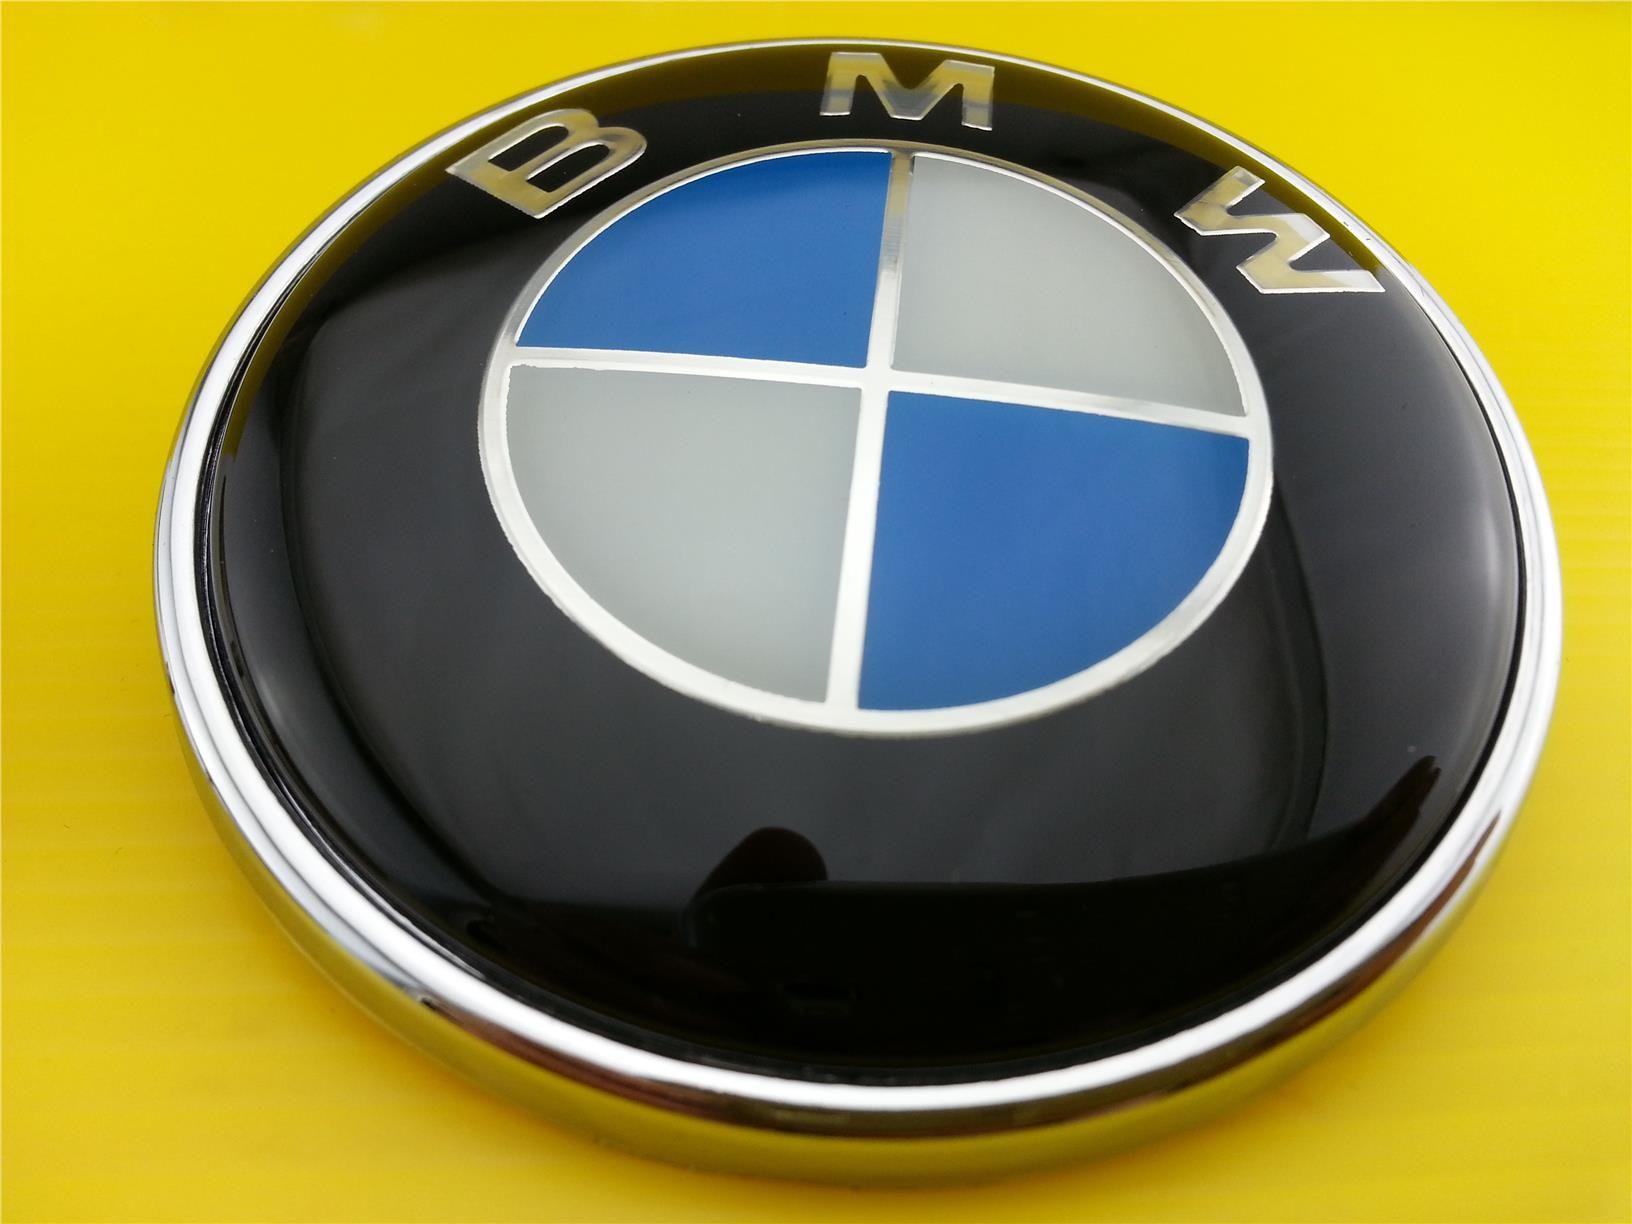 New BMW Logo - New BMW EMBLEM LOGO FRONT OR REAR S (end 10/24/2019 8:38 AM)